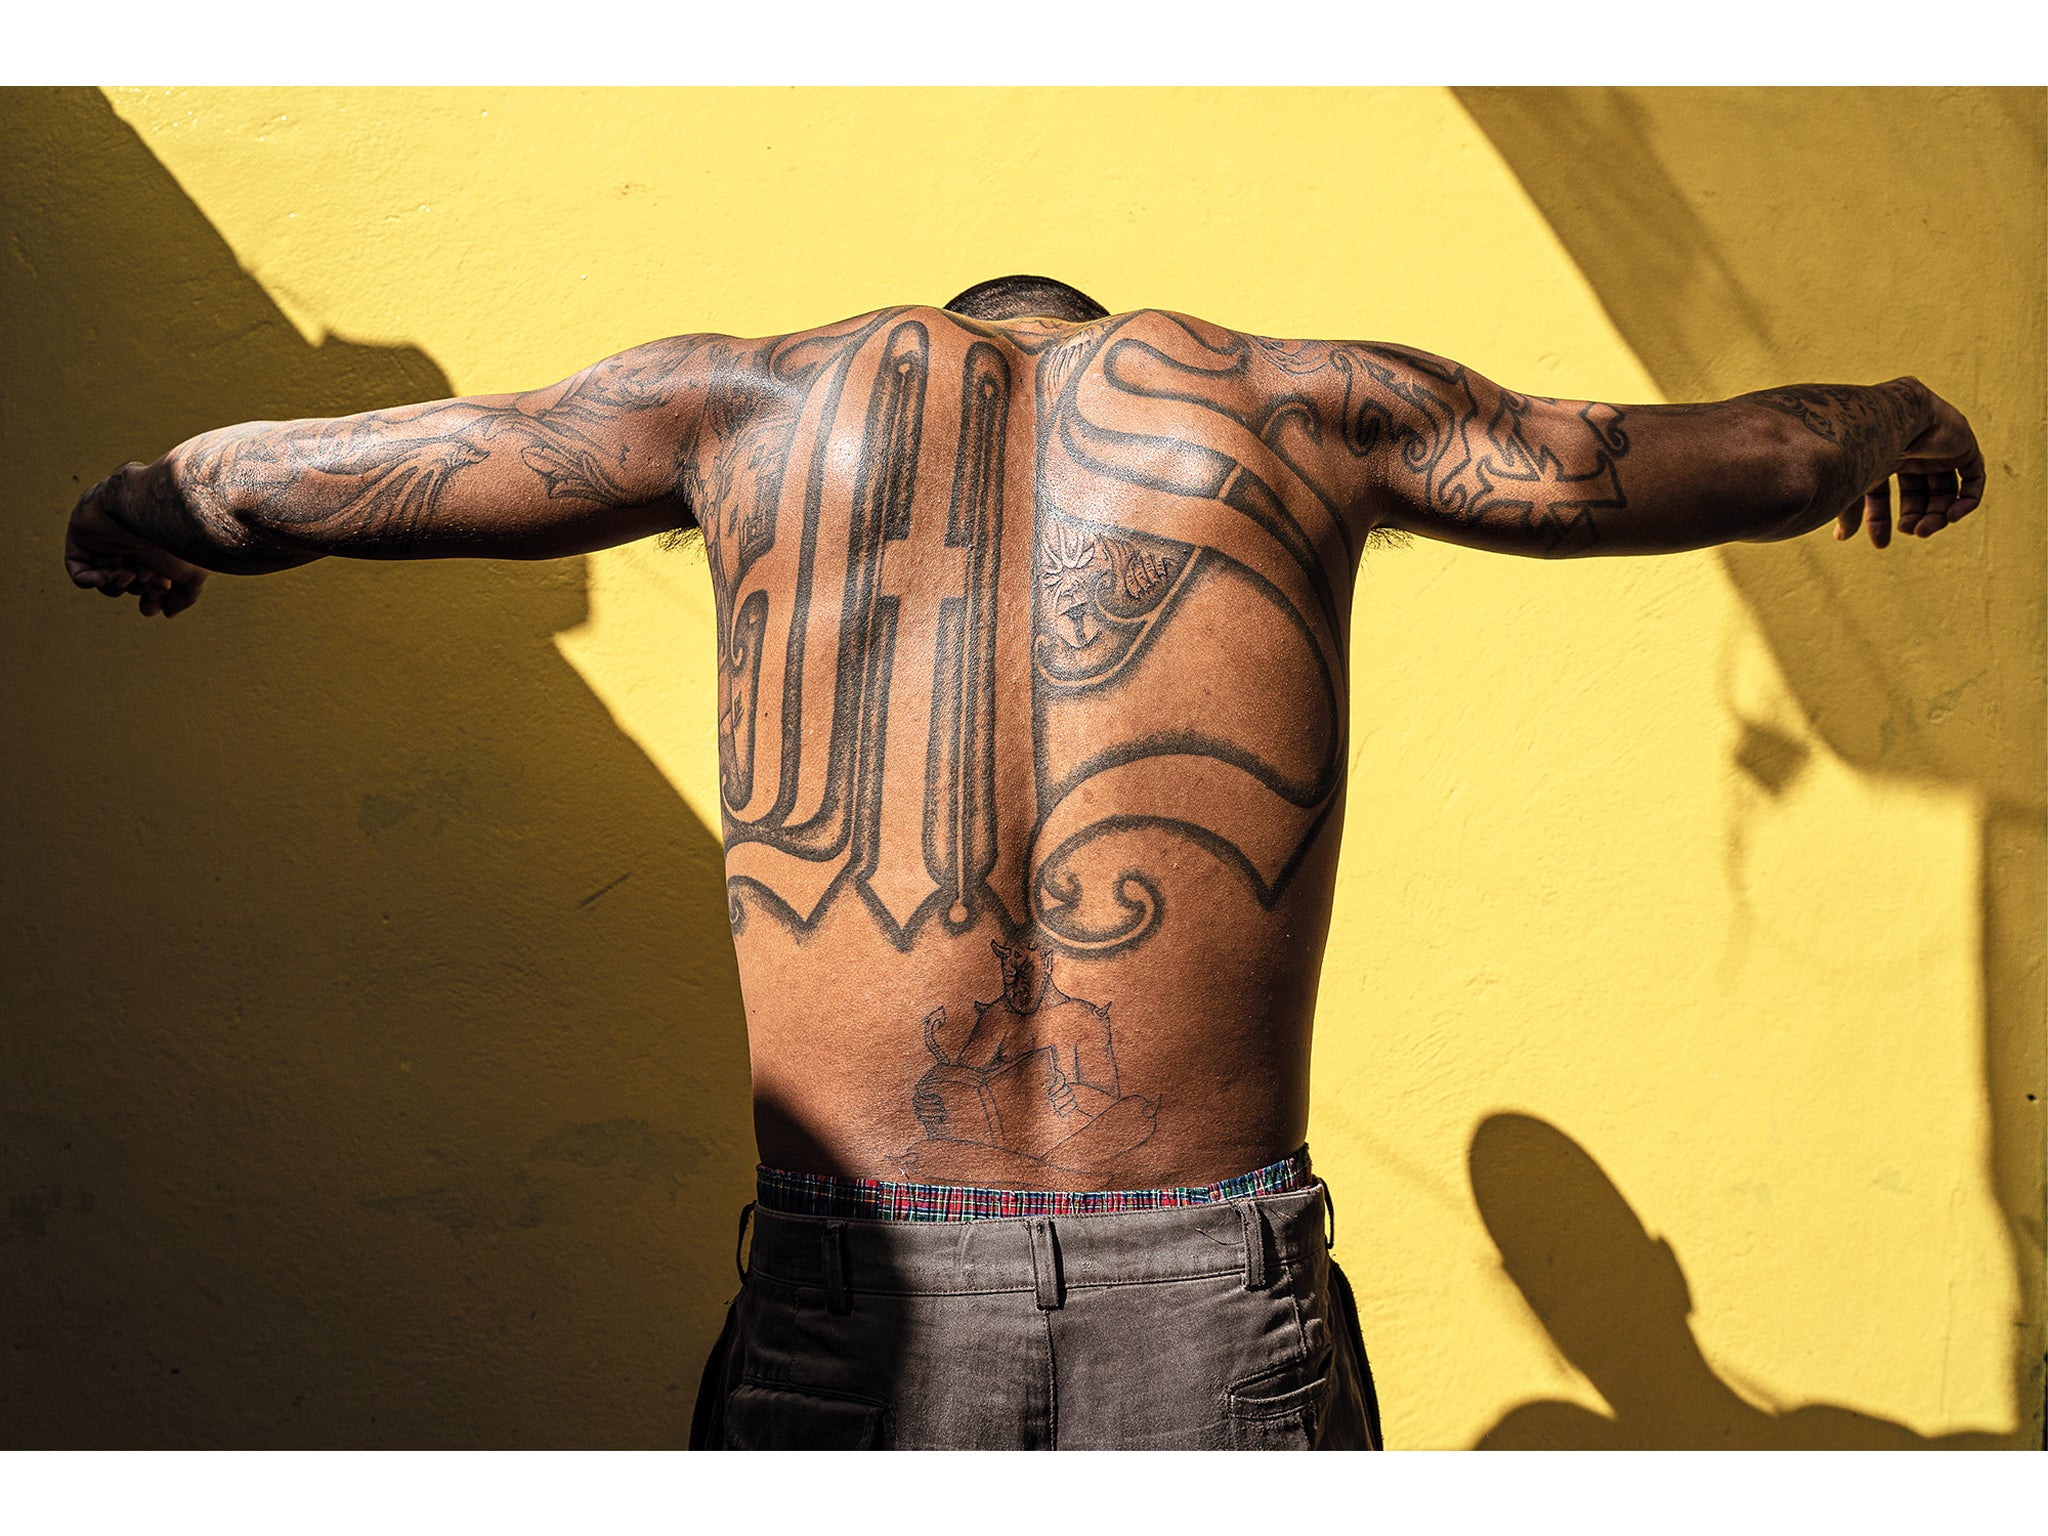 No way out A look inside El Salvadors brutal gang culture The Independent pic